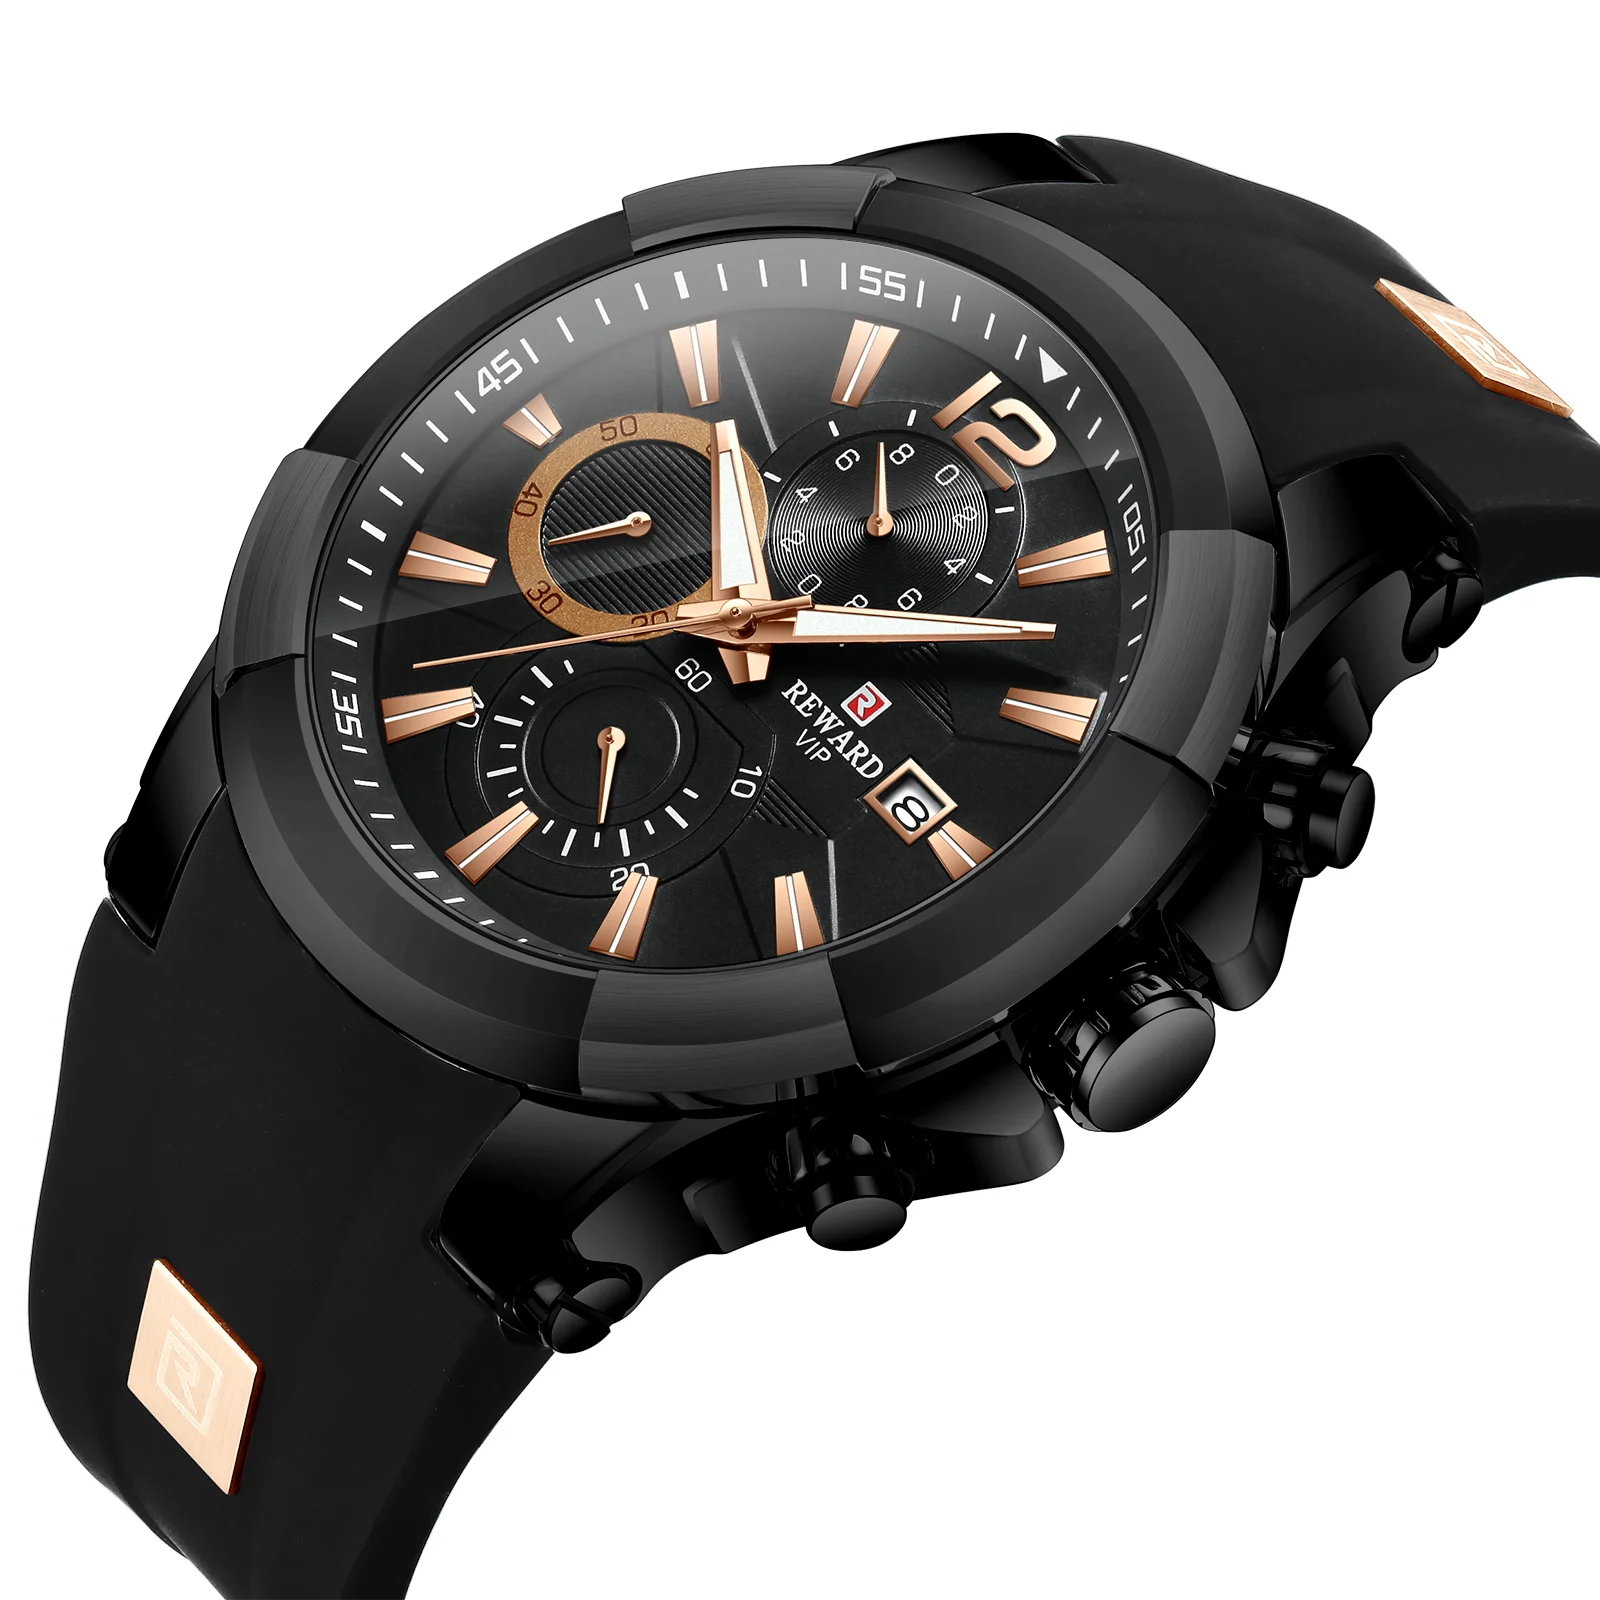 Reward china custom logo business black sport band watch for men Customizable watches Factory OEM/ODM RD83006M